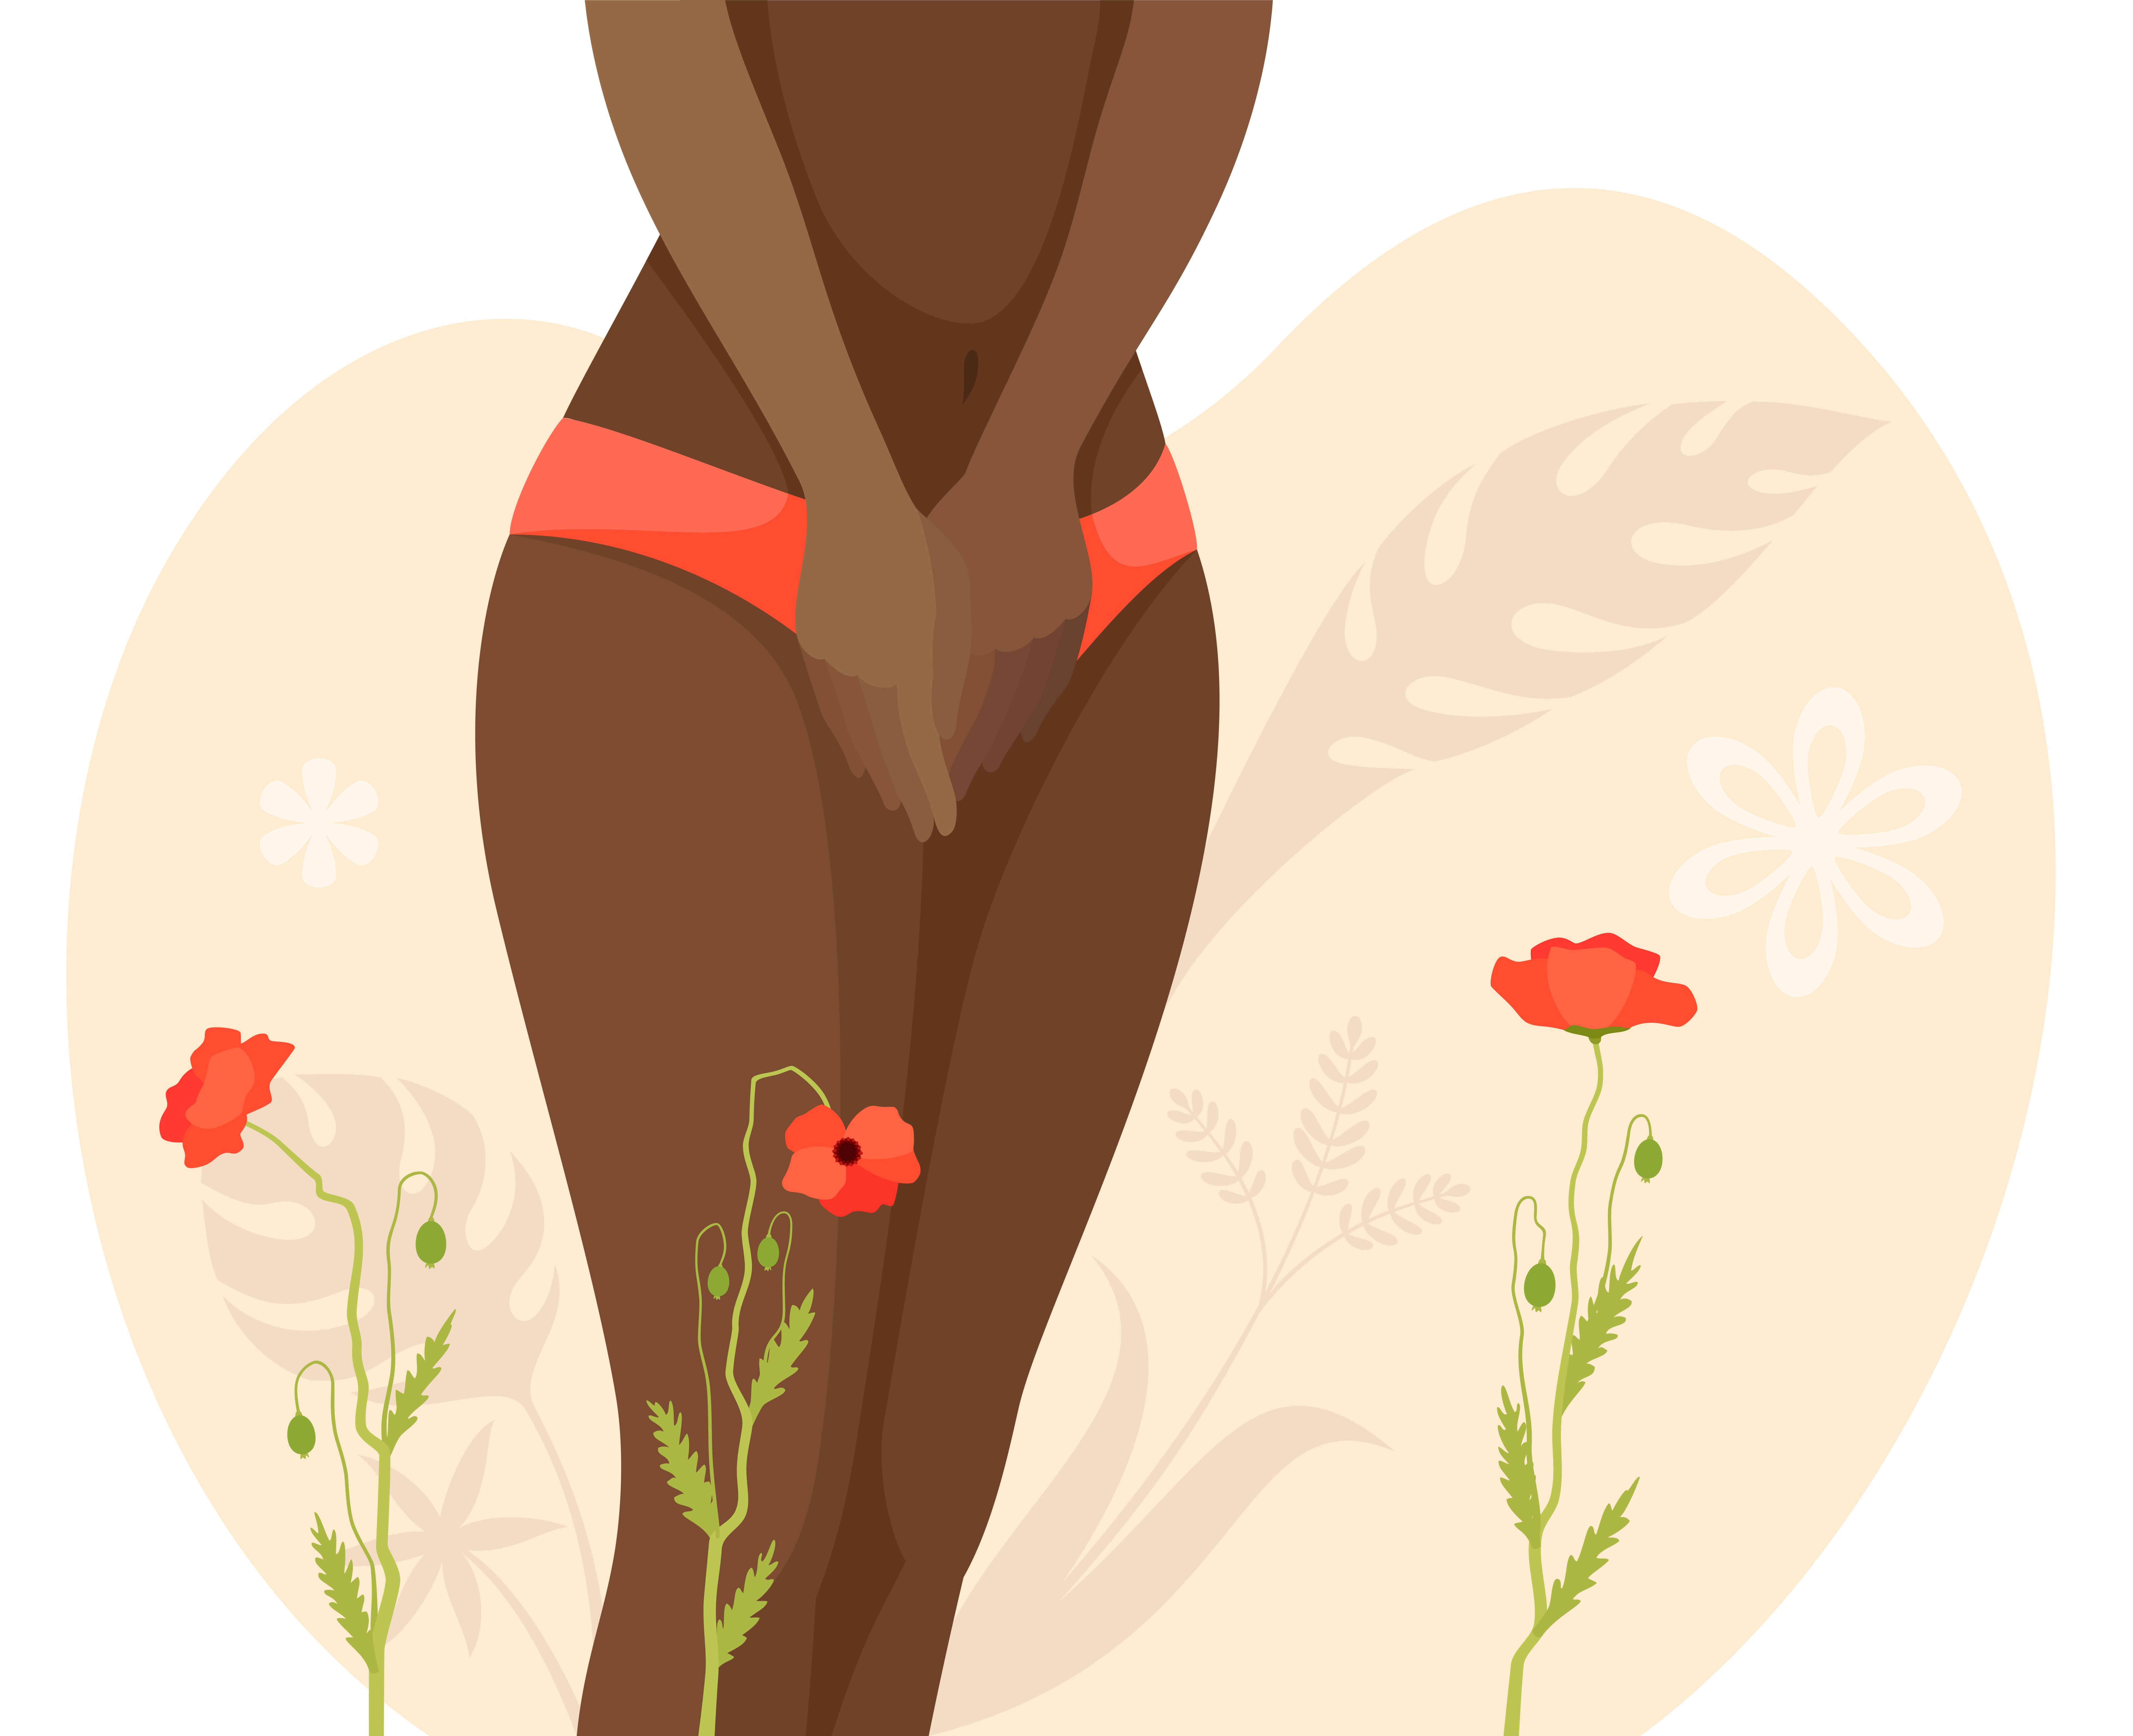 african woman in underwear women's hygiene menstruation period menopause urinary incontinence